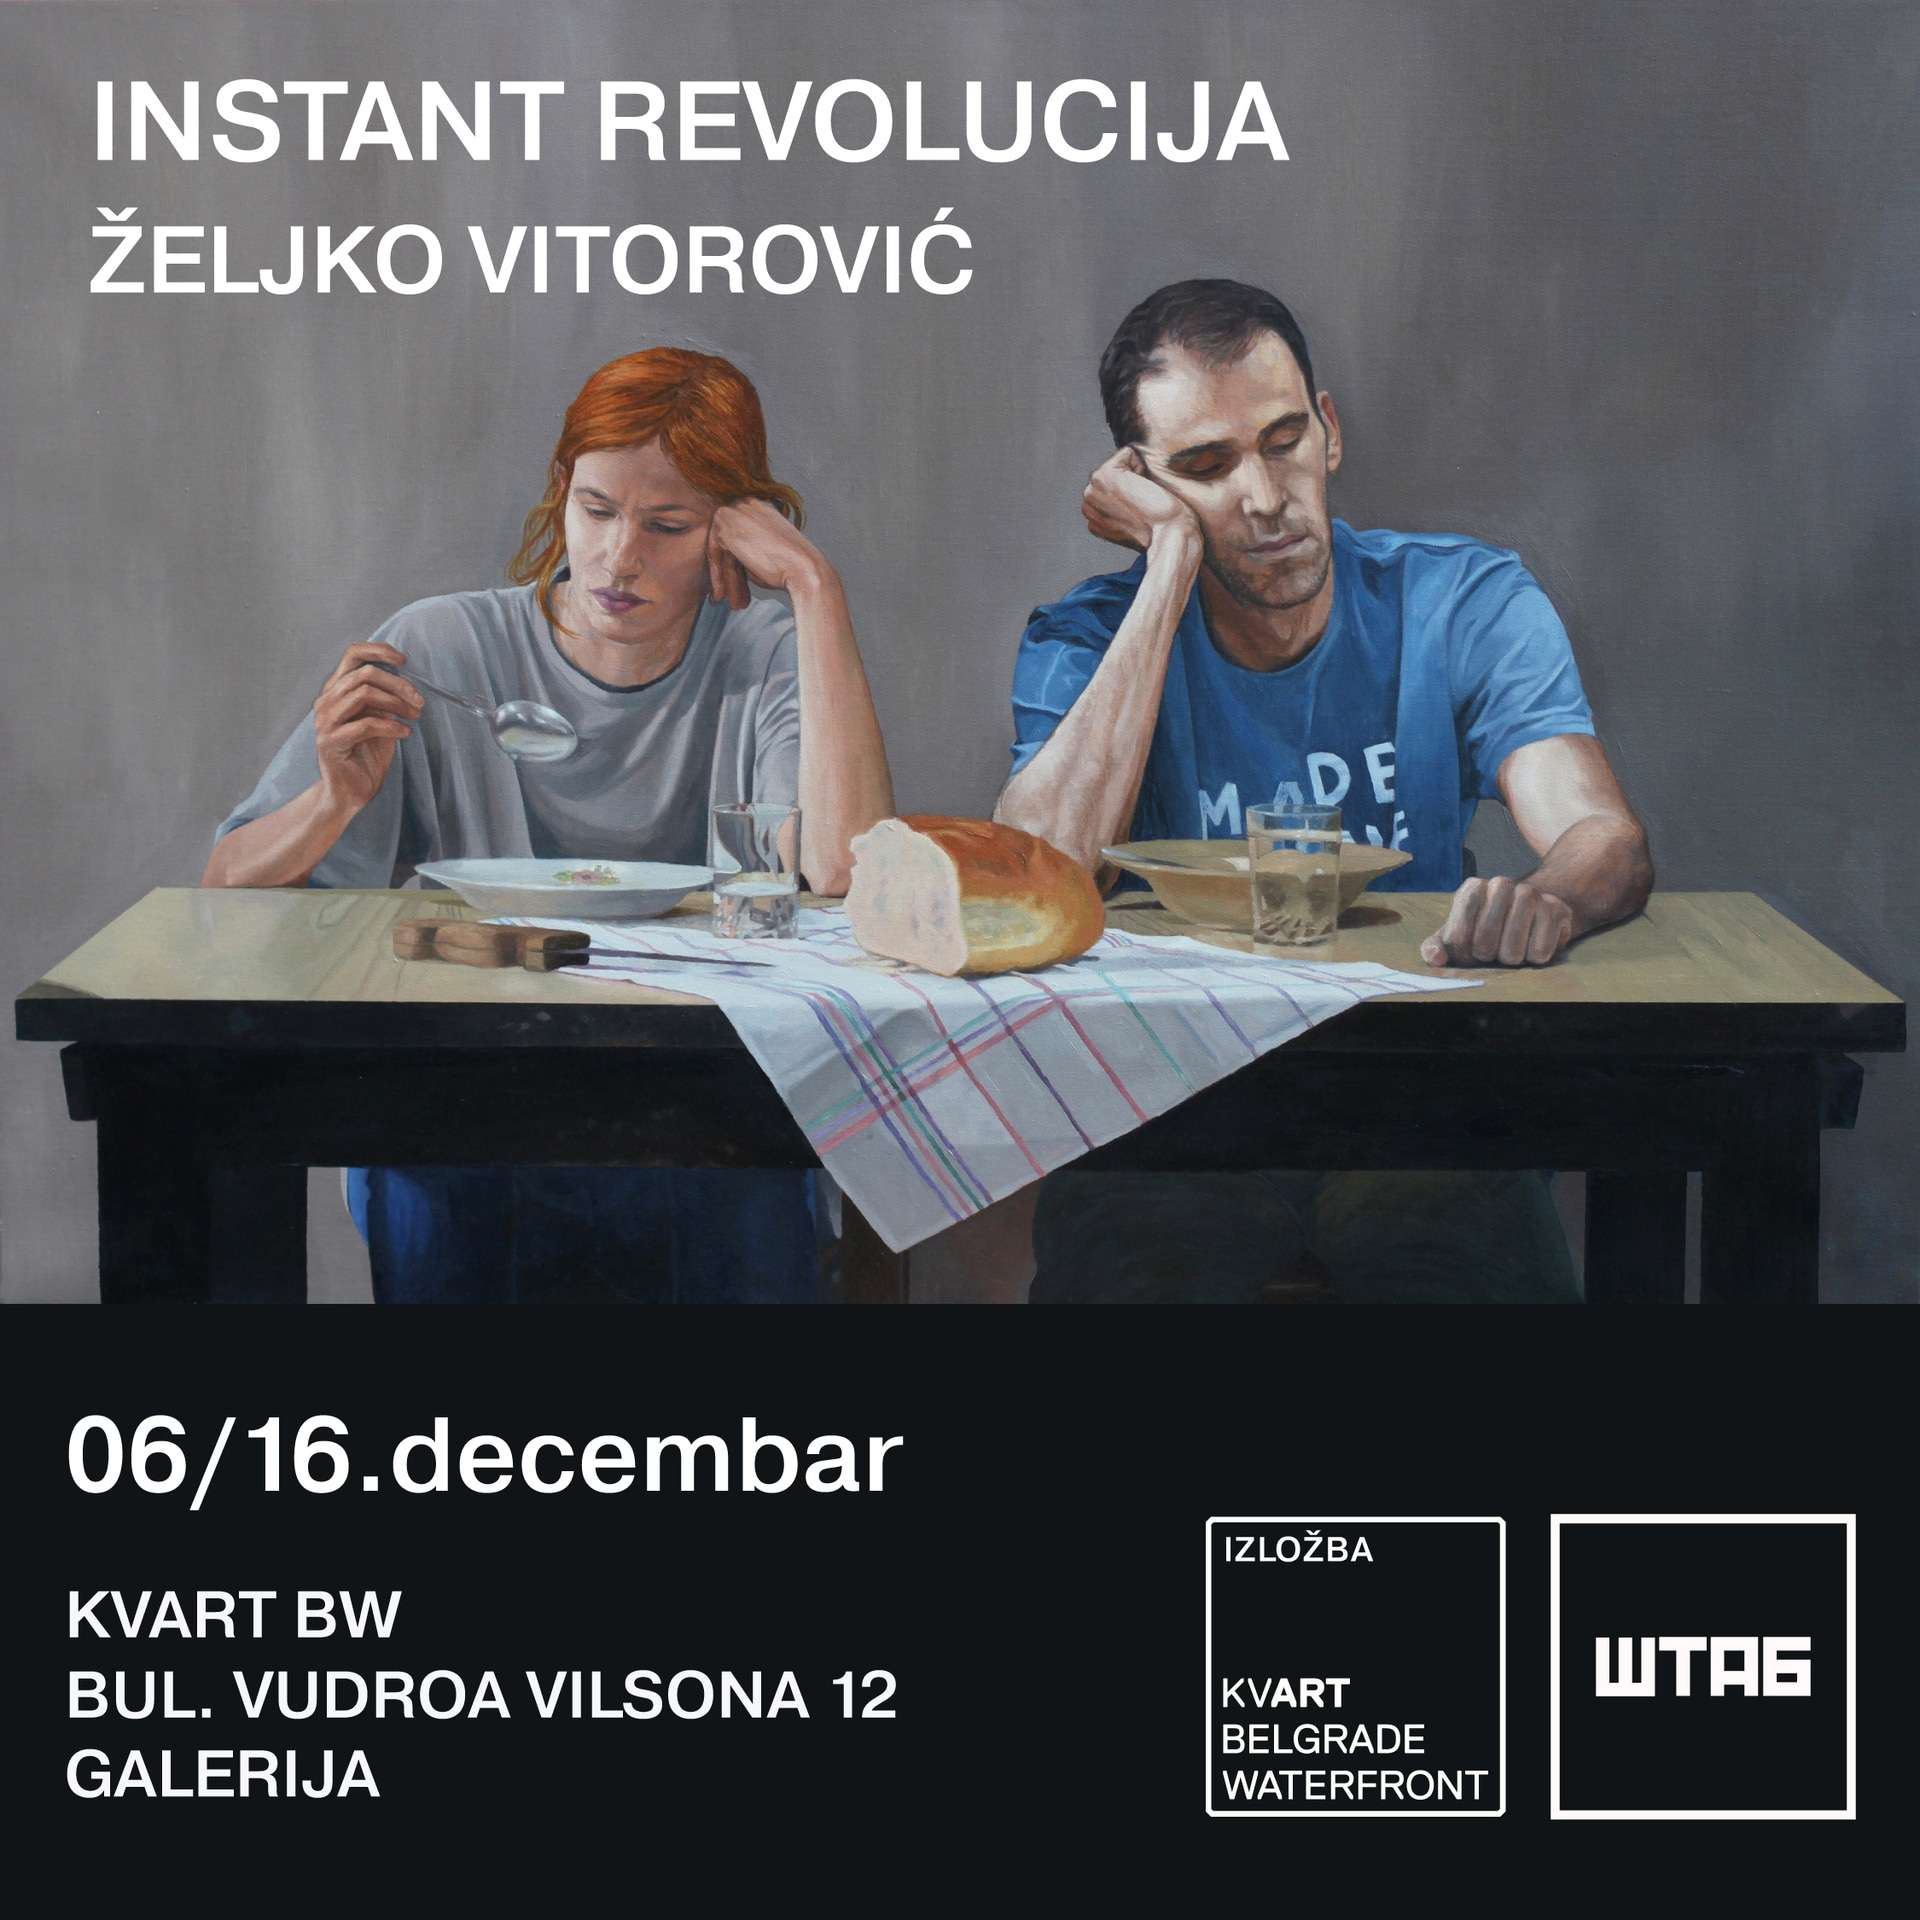 Exhibition of Zeljko Vitorovic ,,Instant Revolution”